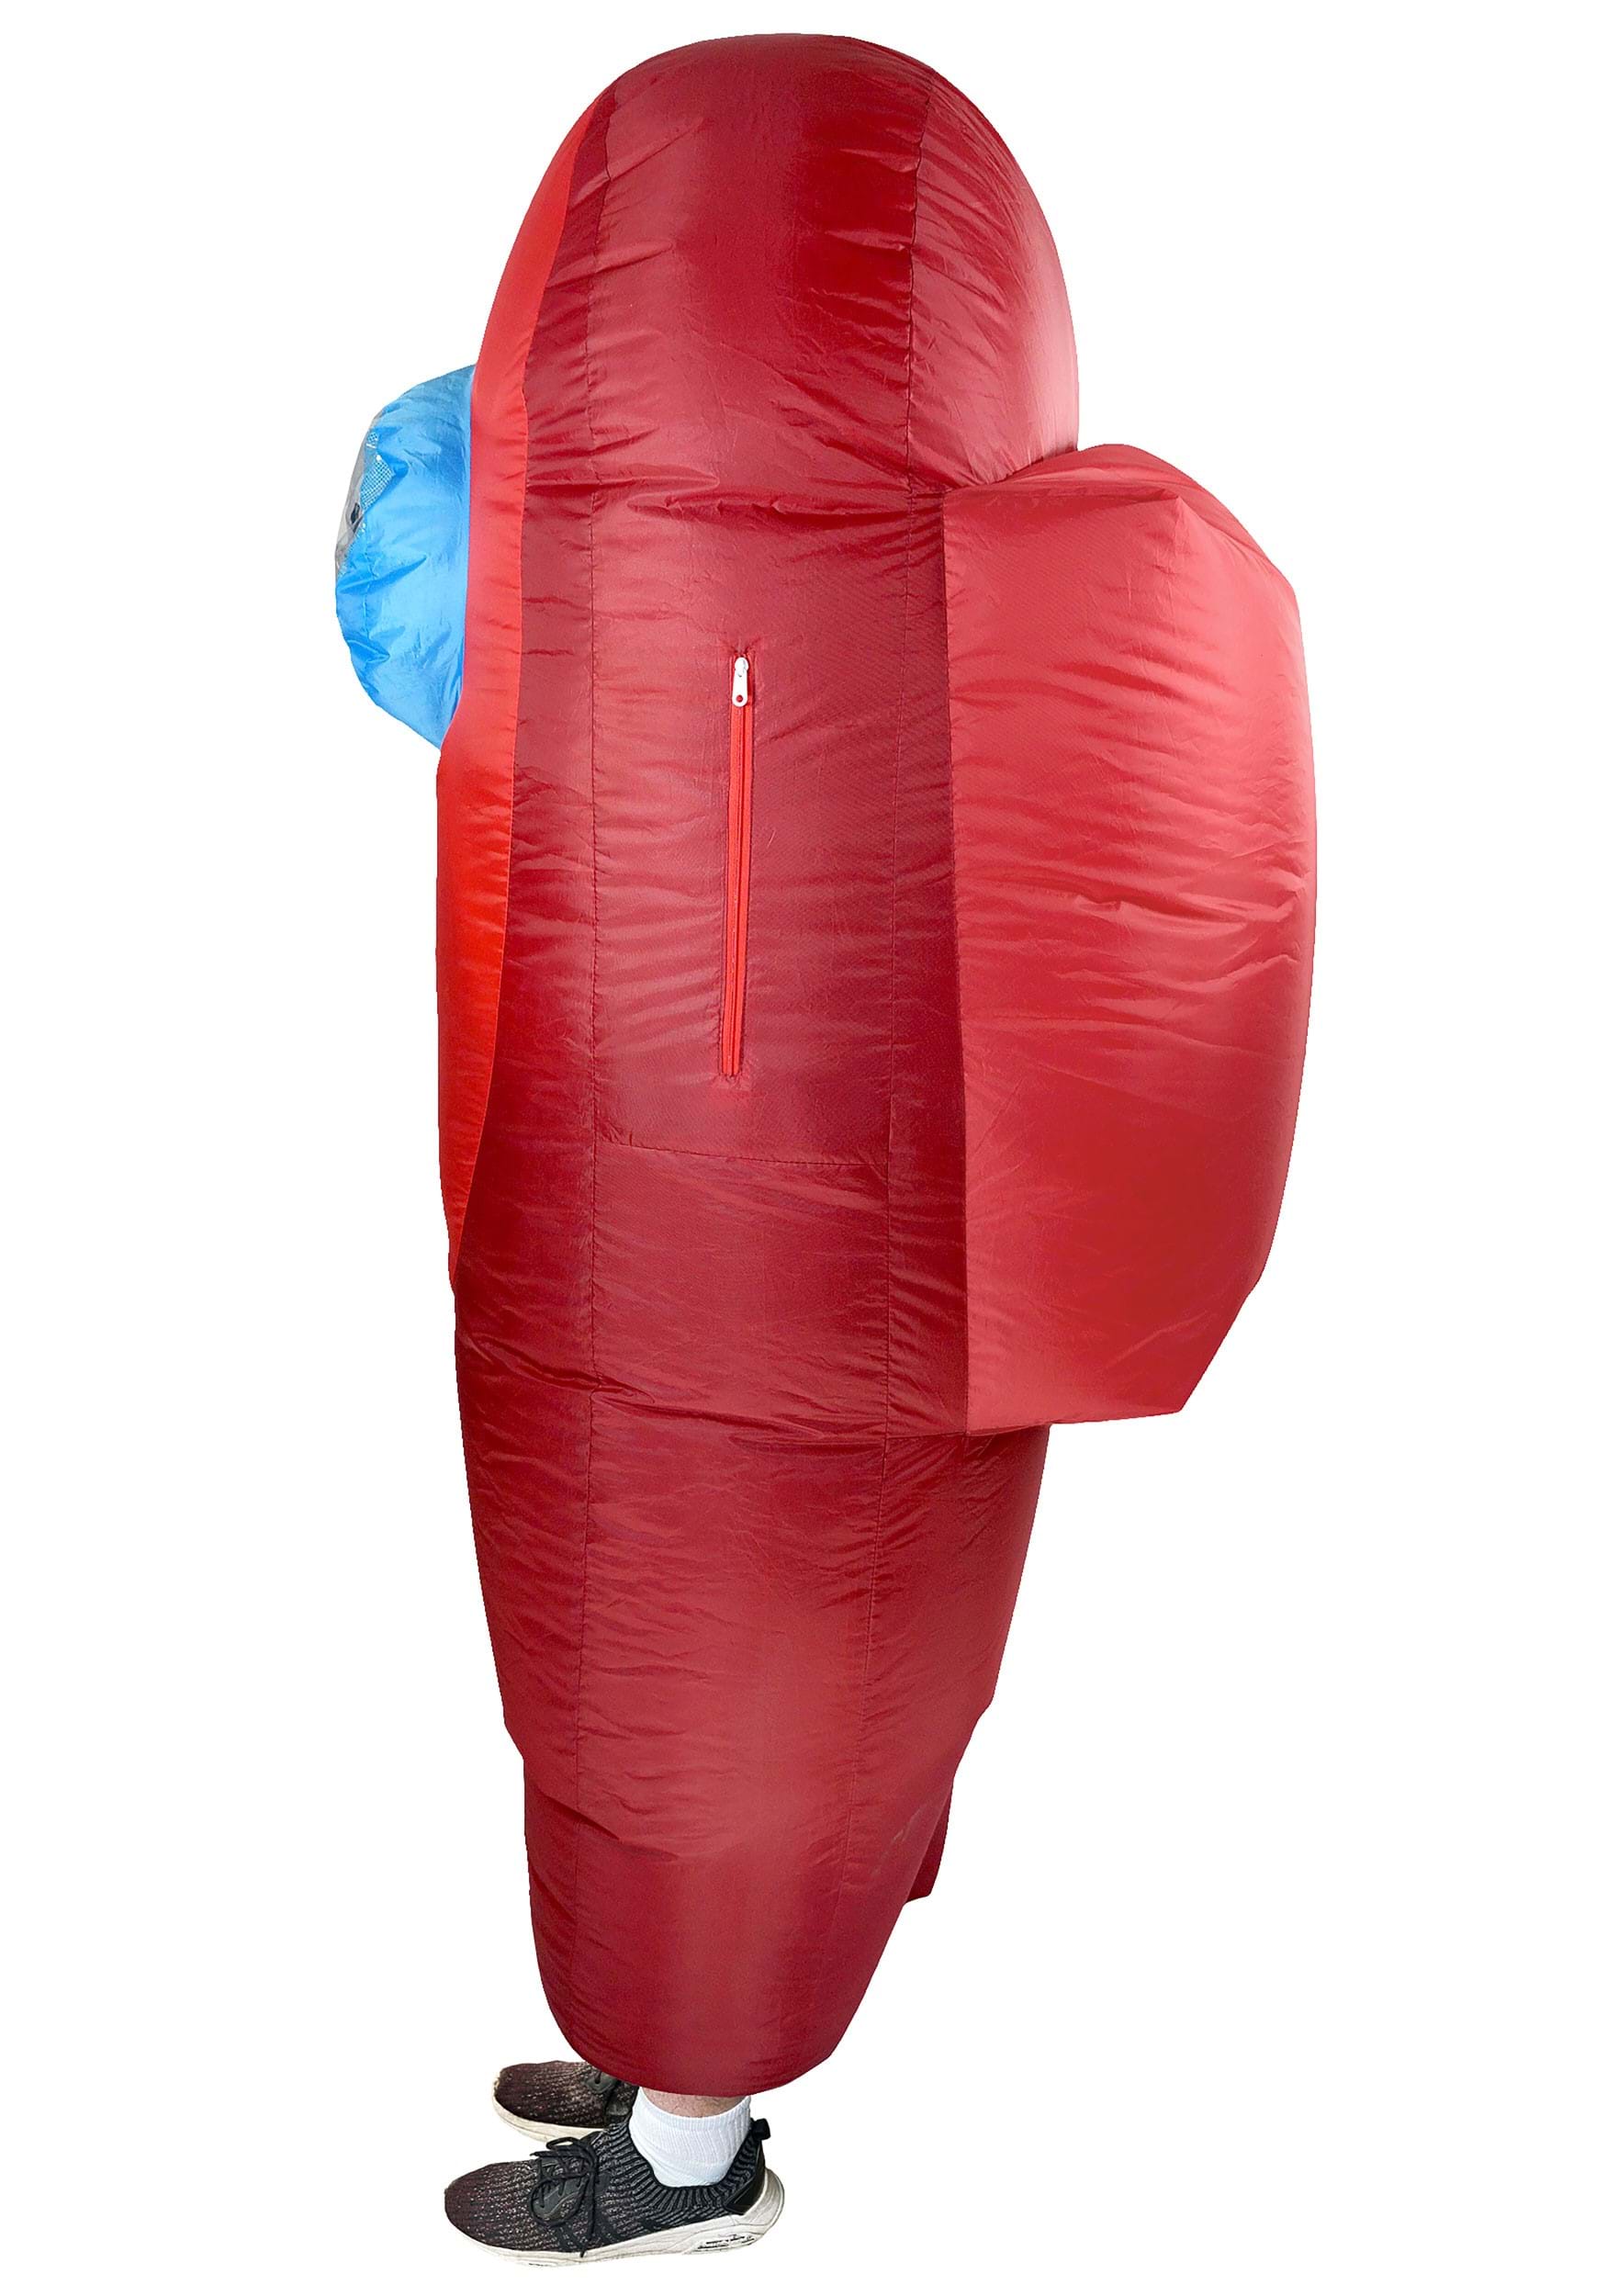 Red Sus Crewmate Killer Adult Fancy Dress Costume